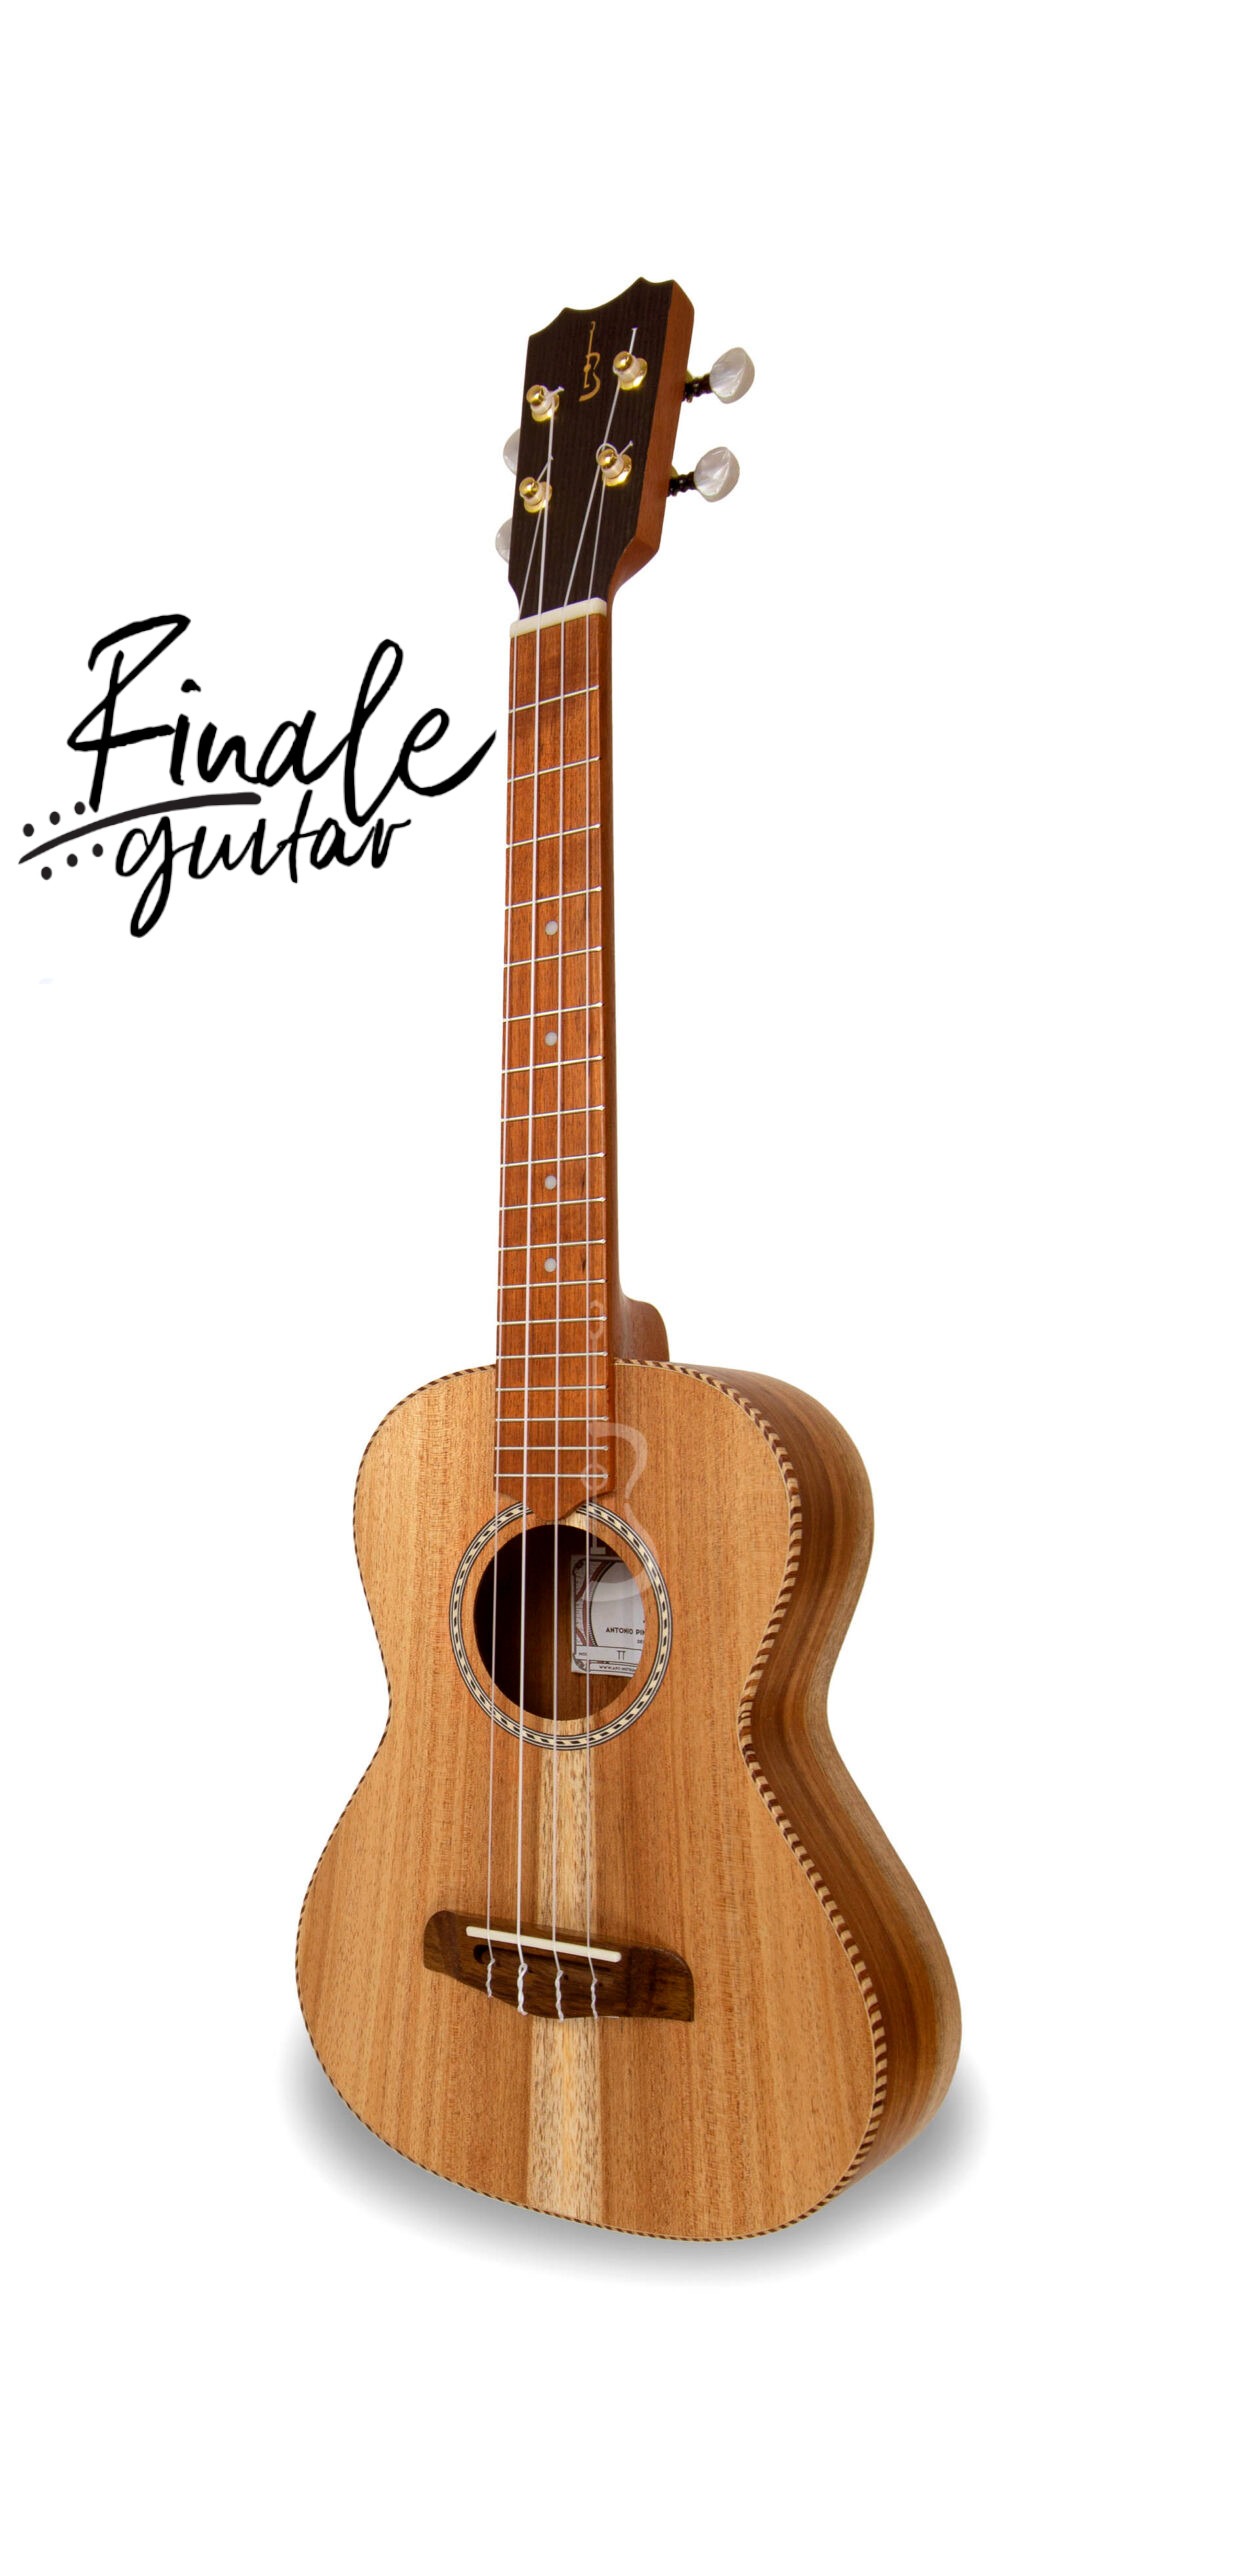 APC TT Ukulele Tenor Tradicional for sale in our Sheffield guitar shop, Finale Guitar